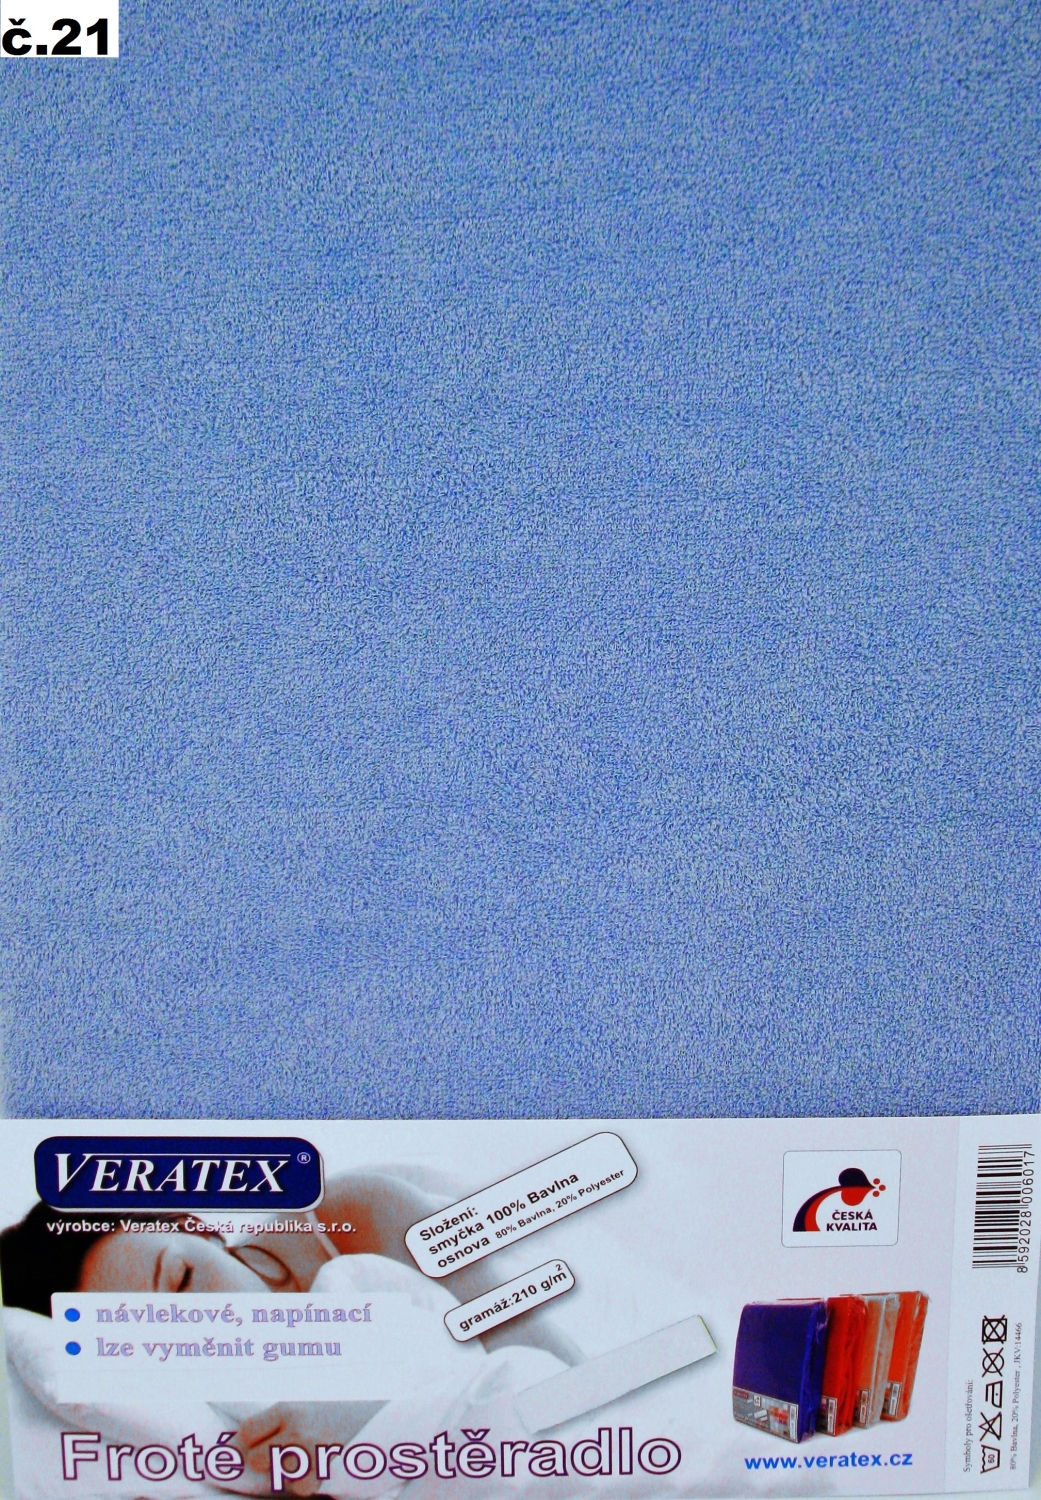 Veratex Froté prostěradlo jednolůžko 90x200/20cm (č.21-sv.modrá)